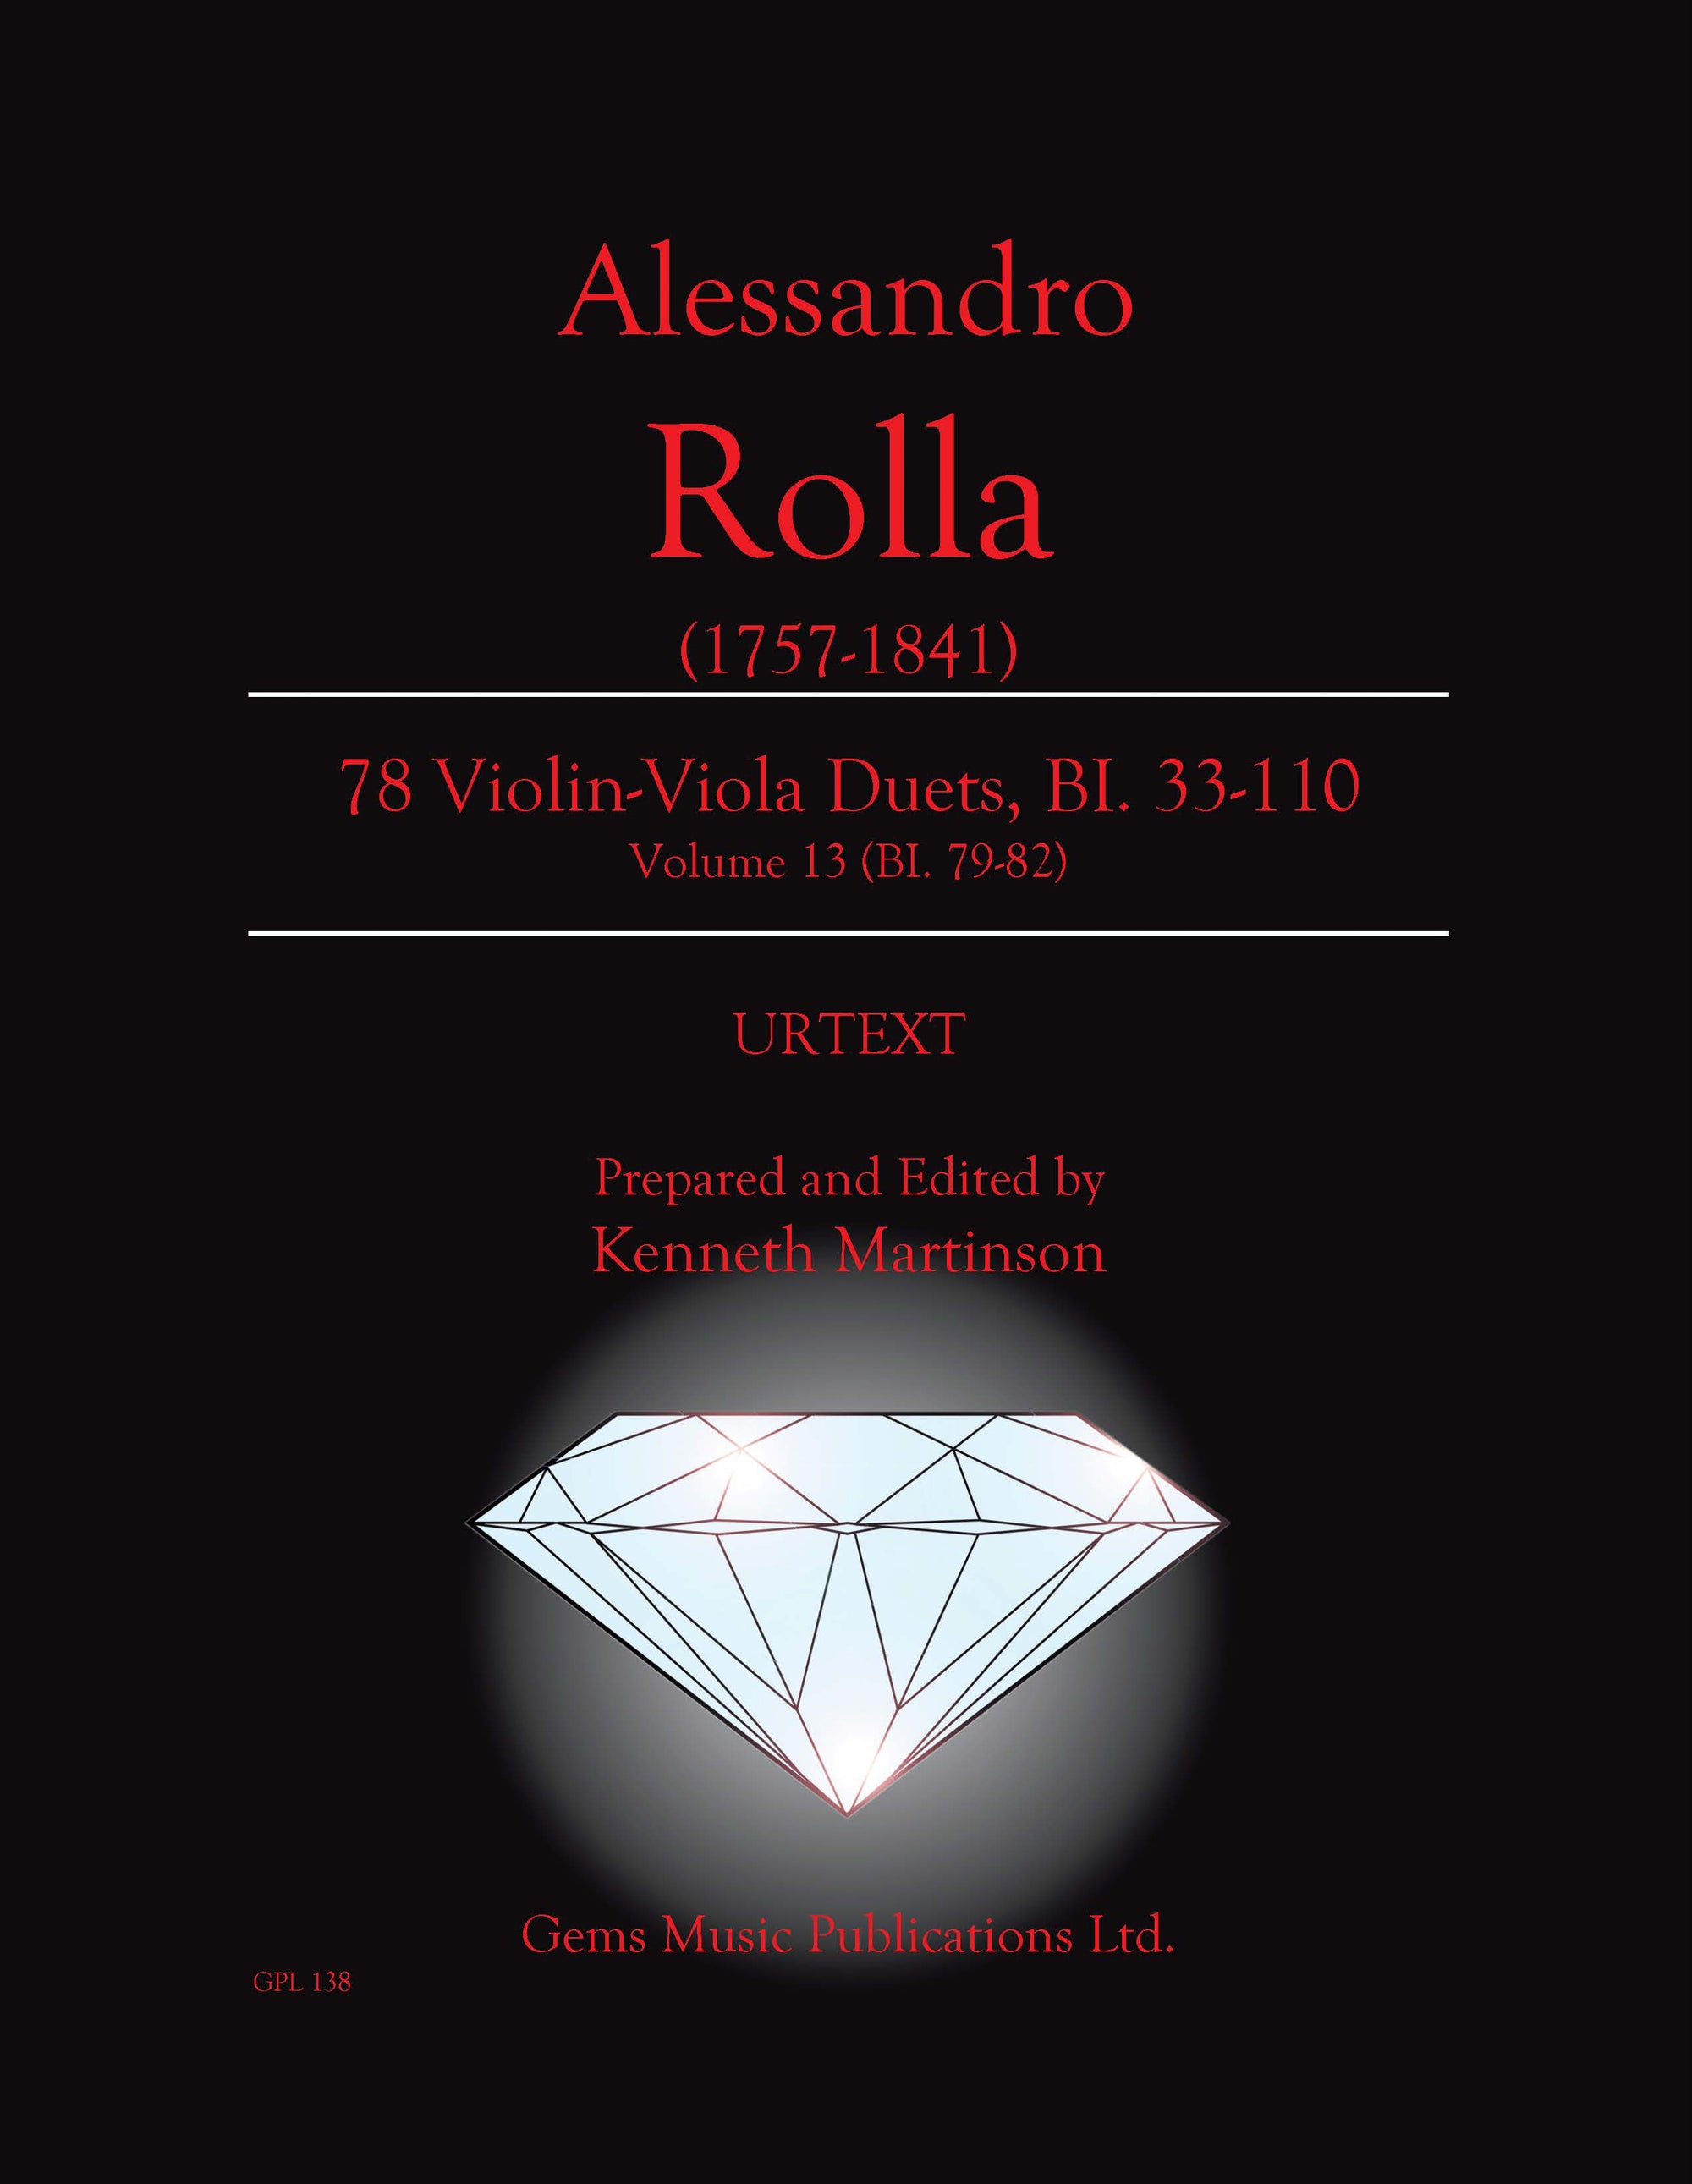 Rolla: Violin-Viola Duets - Volume 13 (BI. 79-82)